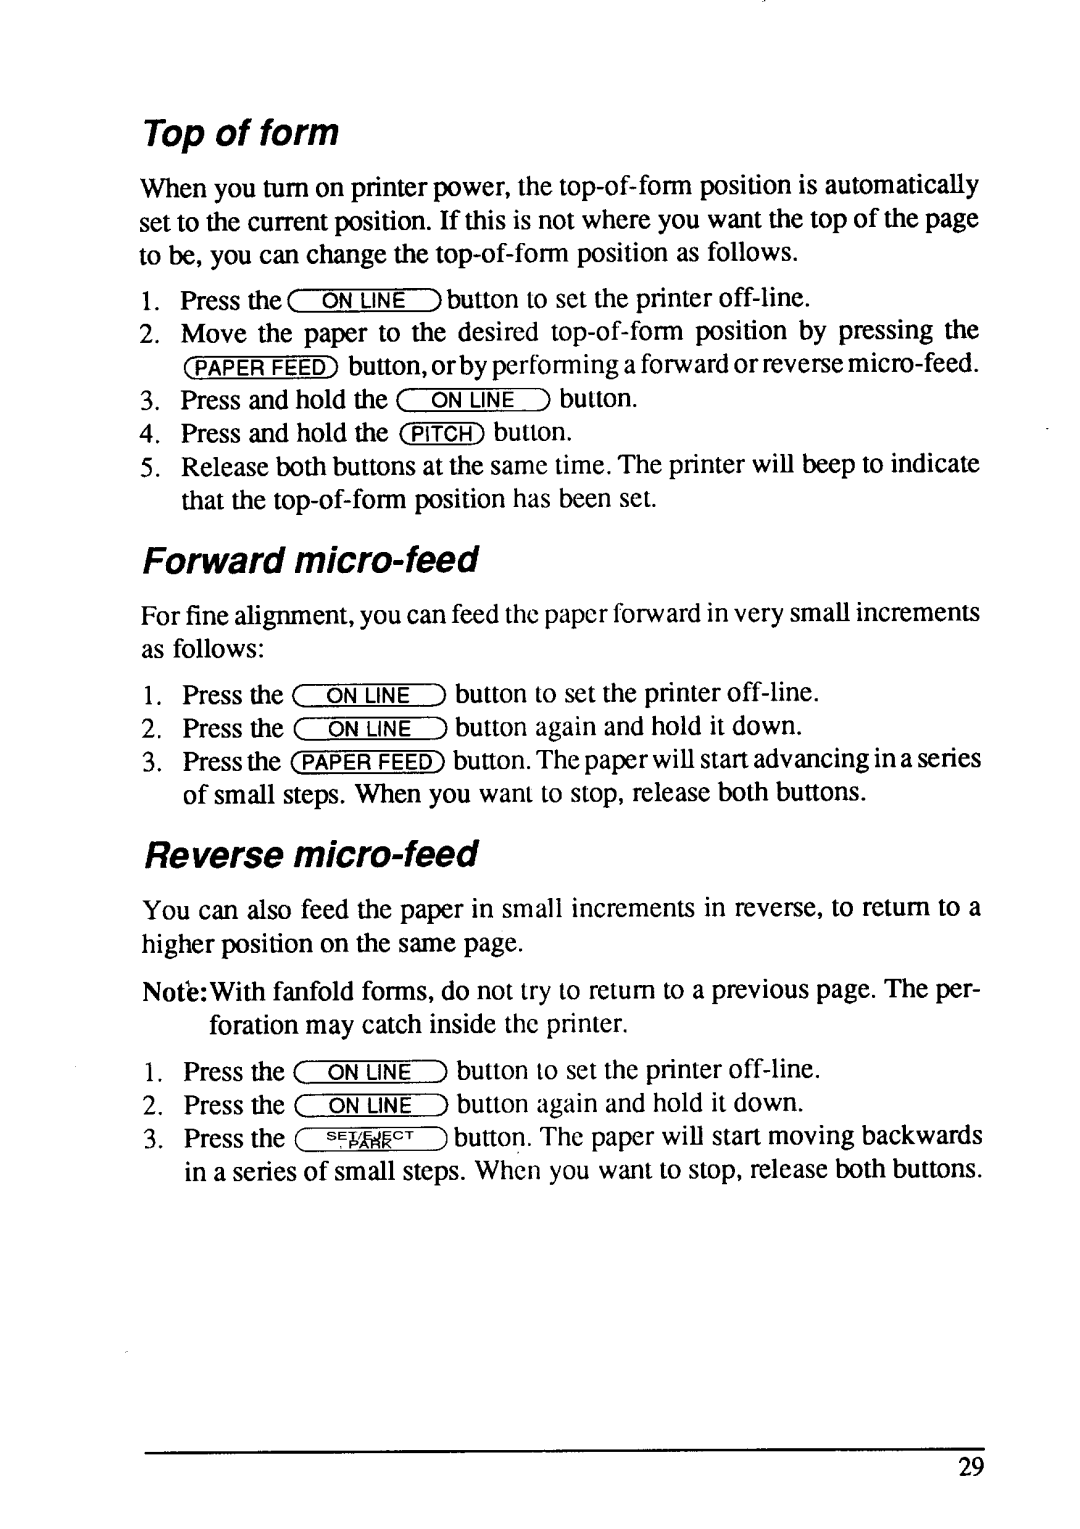 Star Micronics LC24-15 user manual Top of form, Forward micro-feed, Reverse micro-feed 